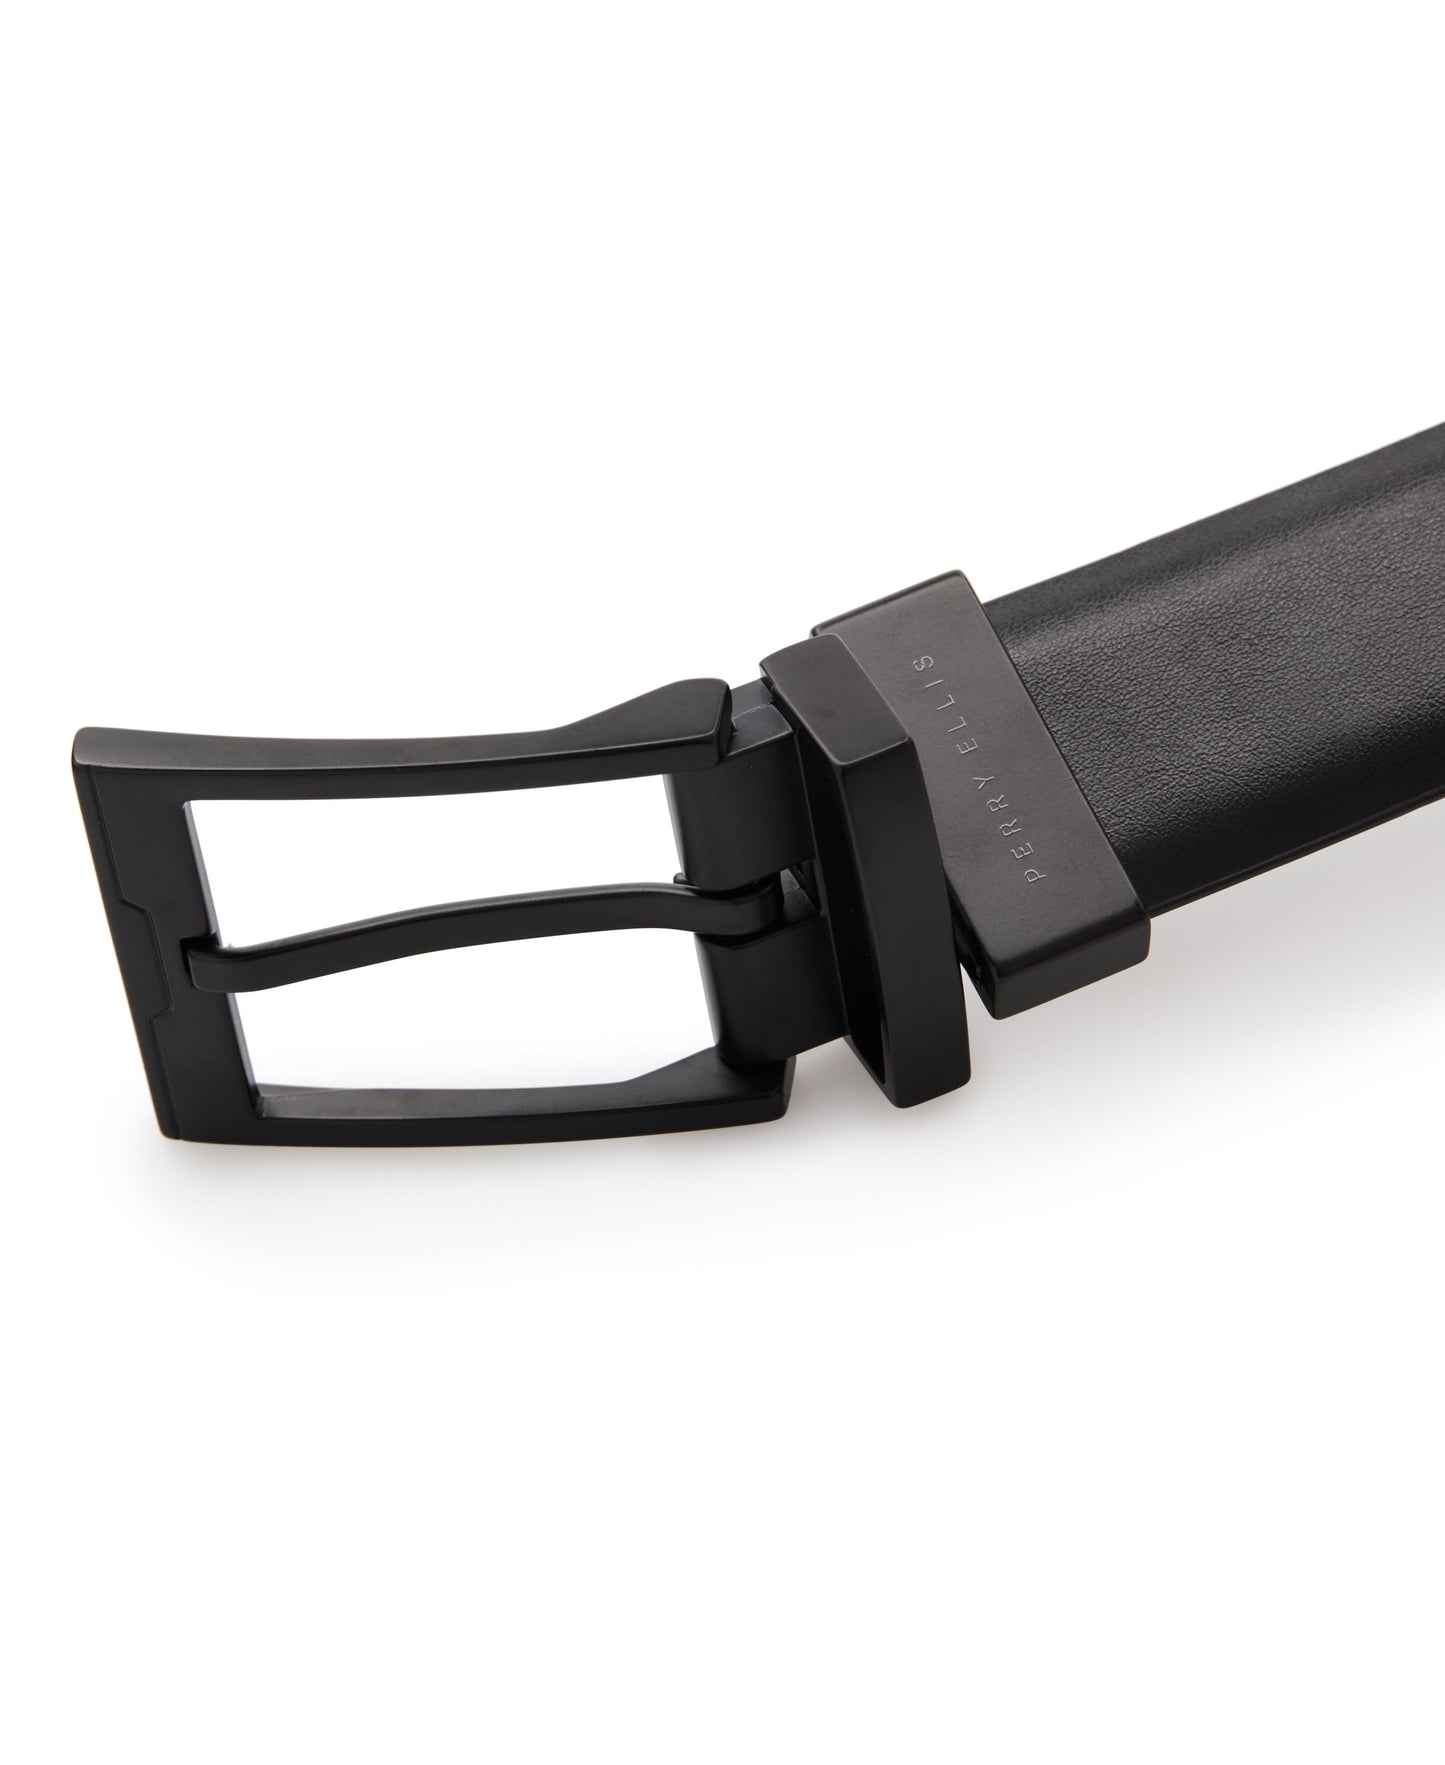 Cap Reversible Leather Belt